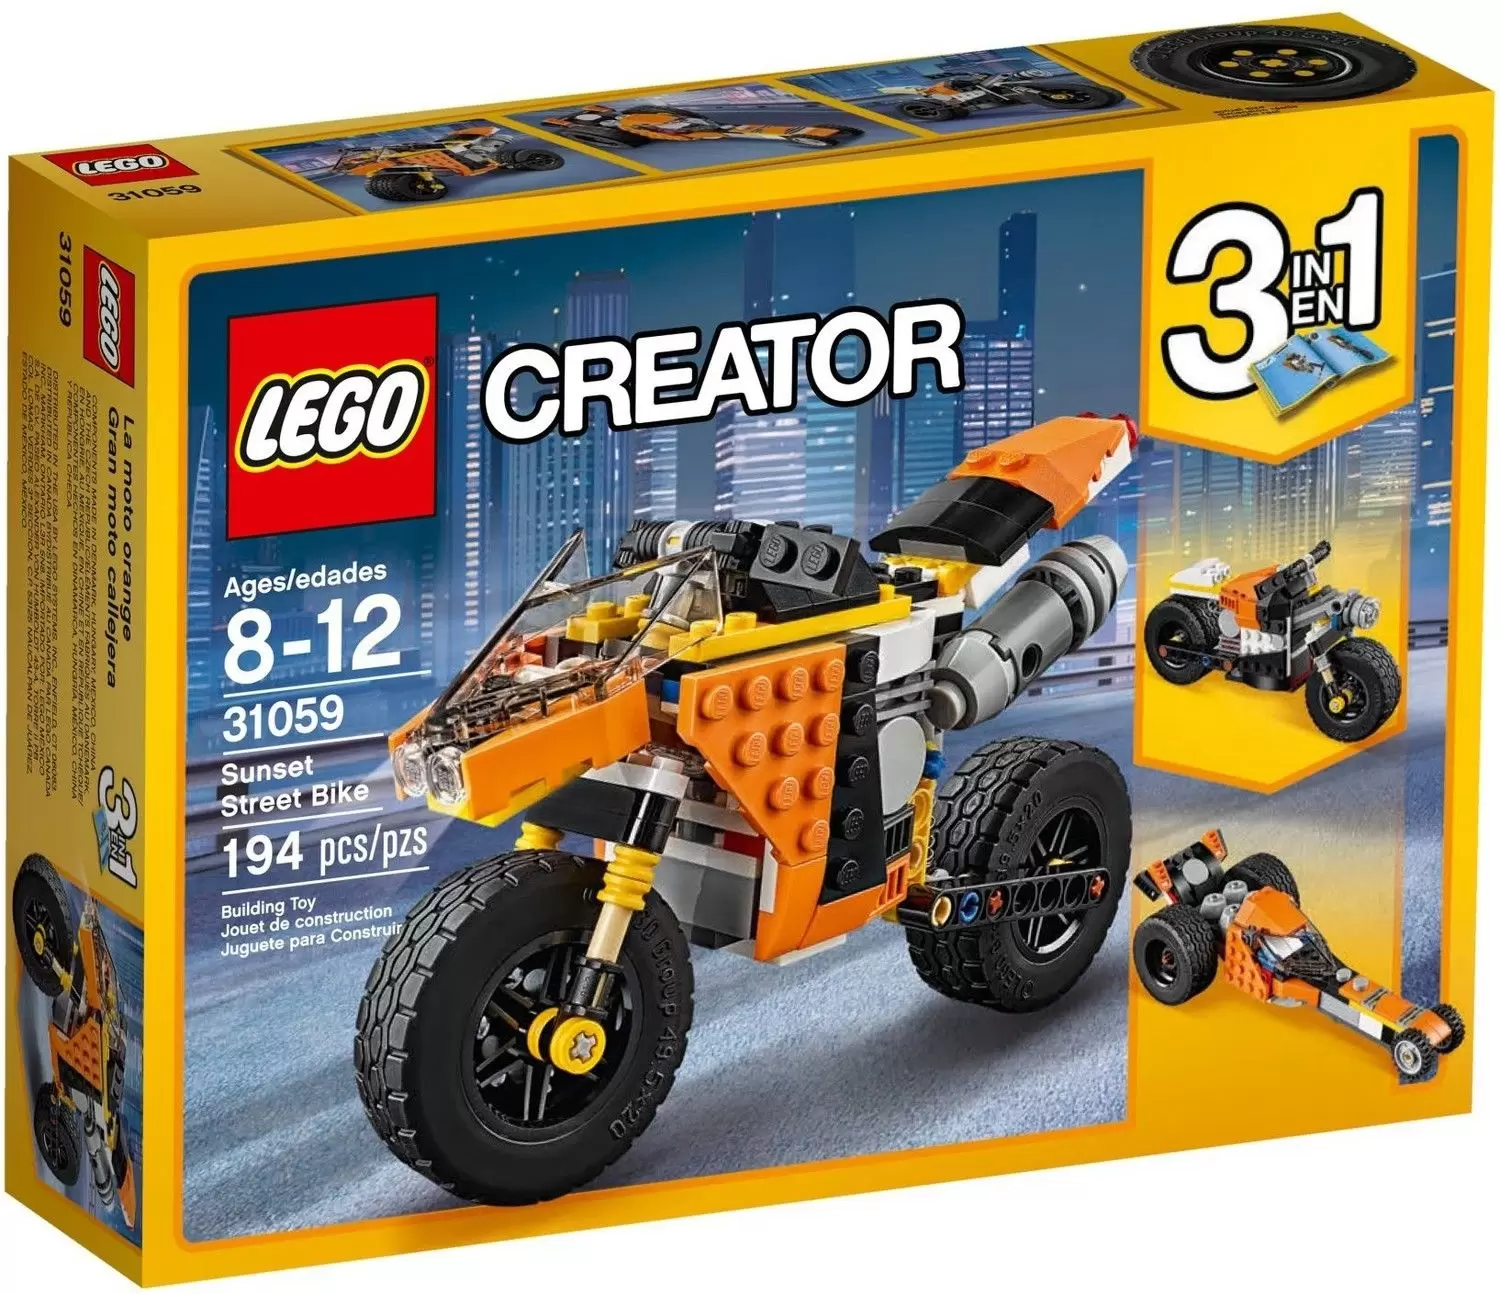 LEGO Creator - Sunset Street Bike